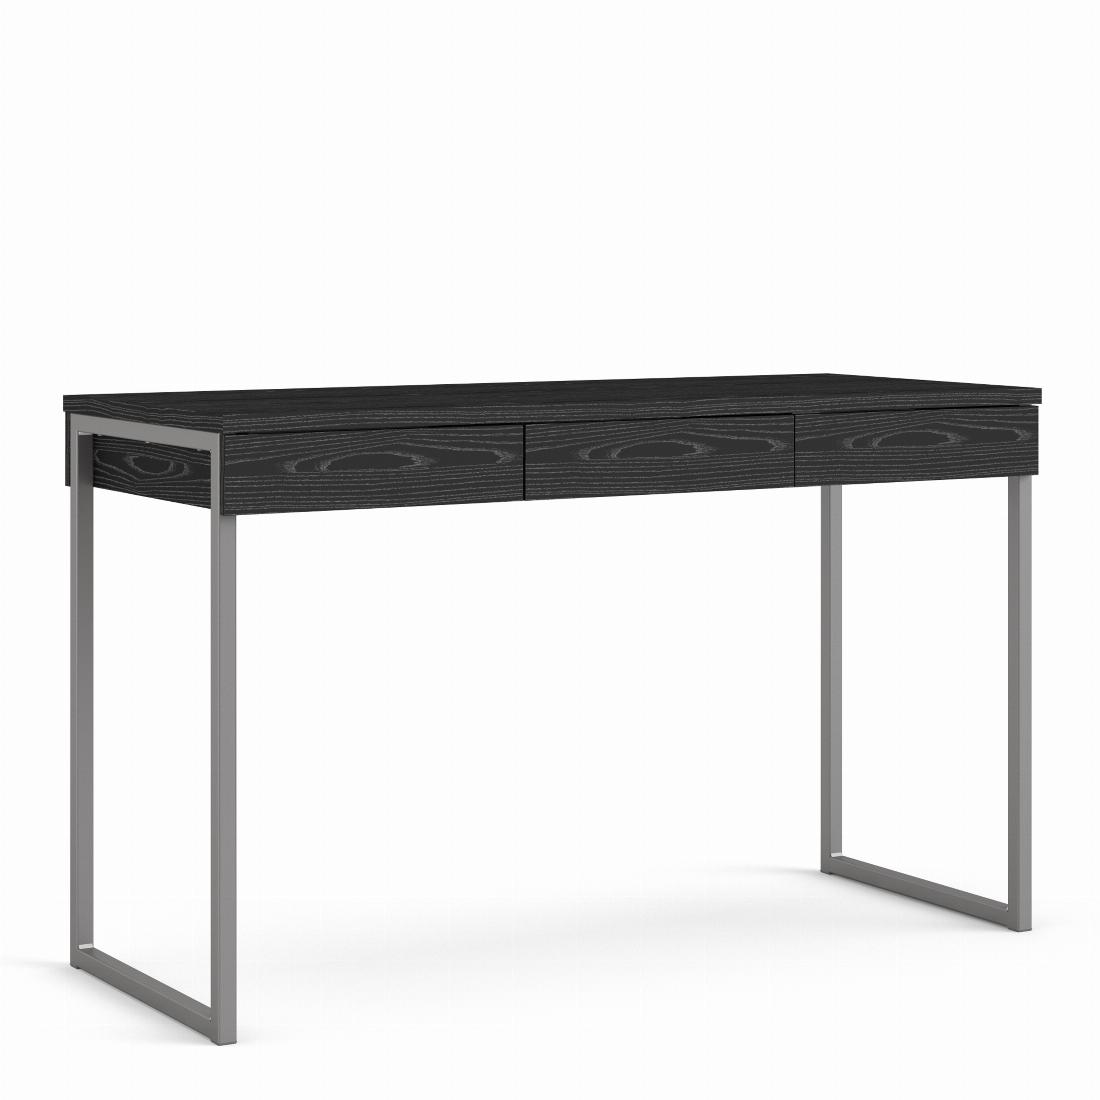 Function Plus Desk 3 Drawers in Black